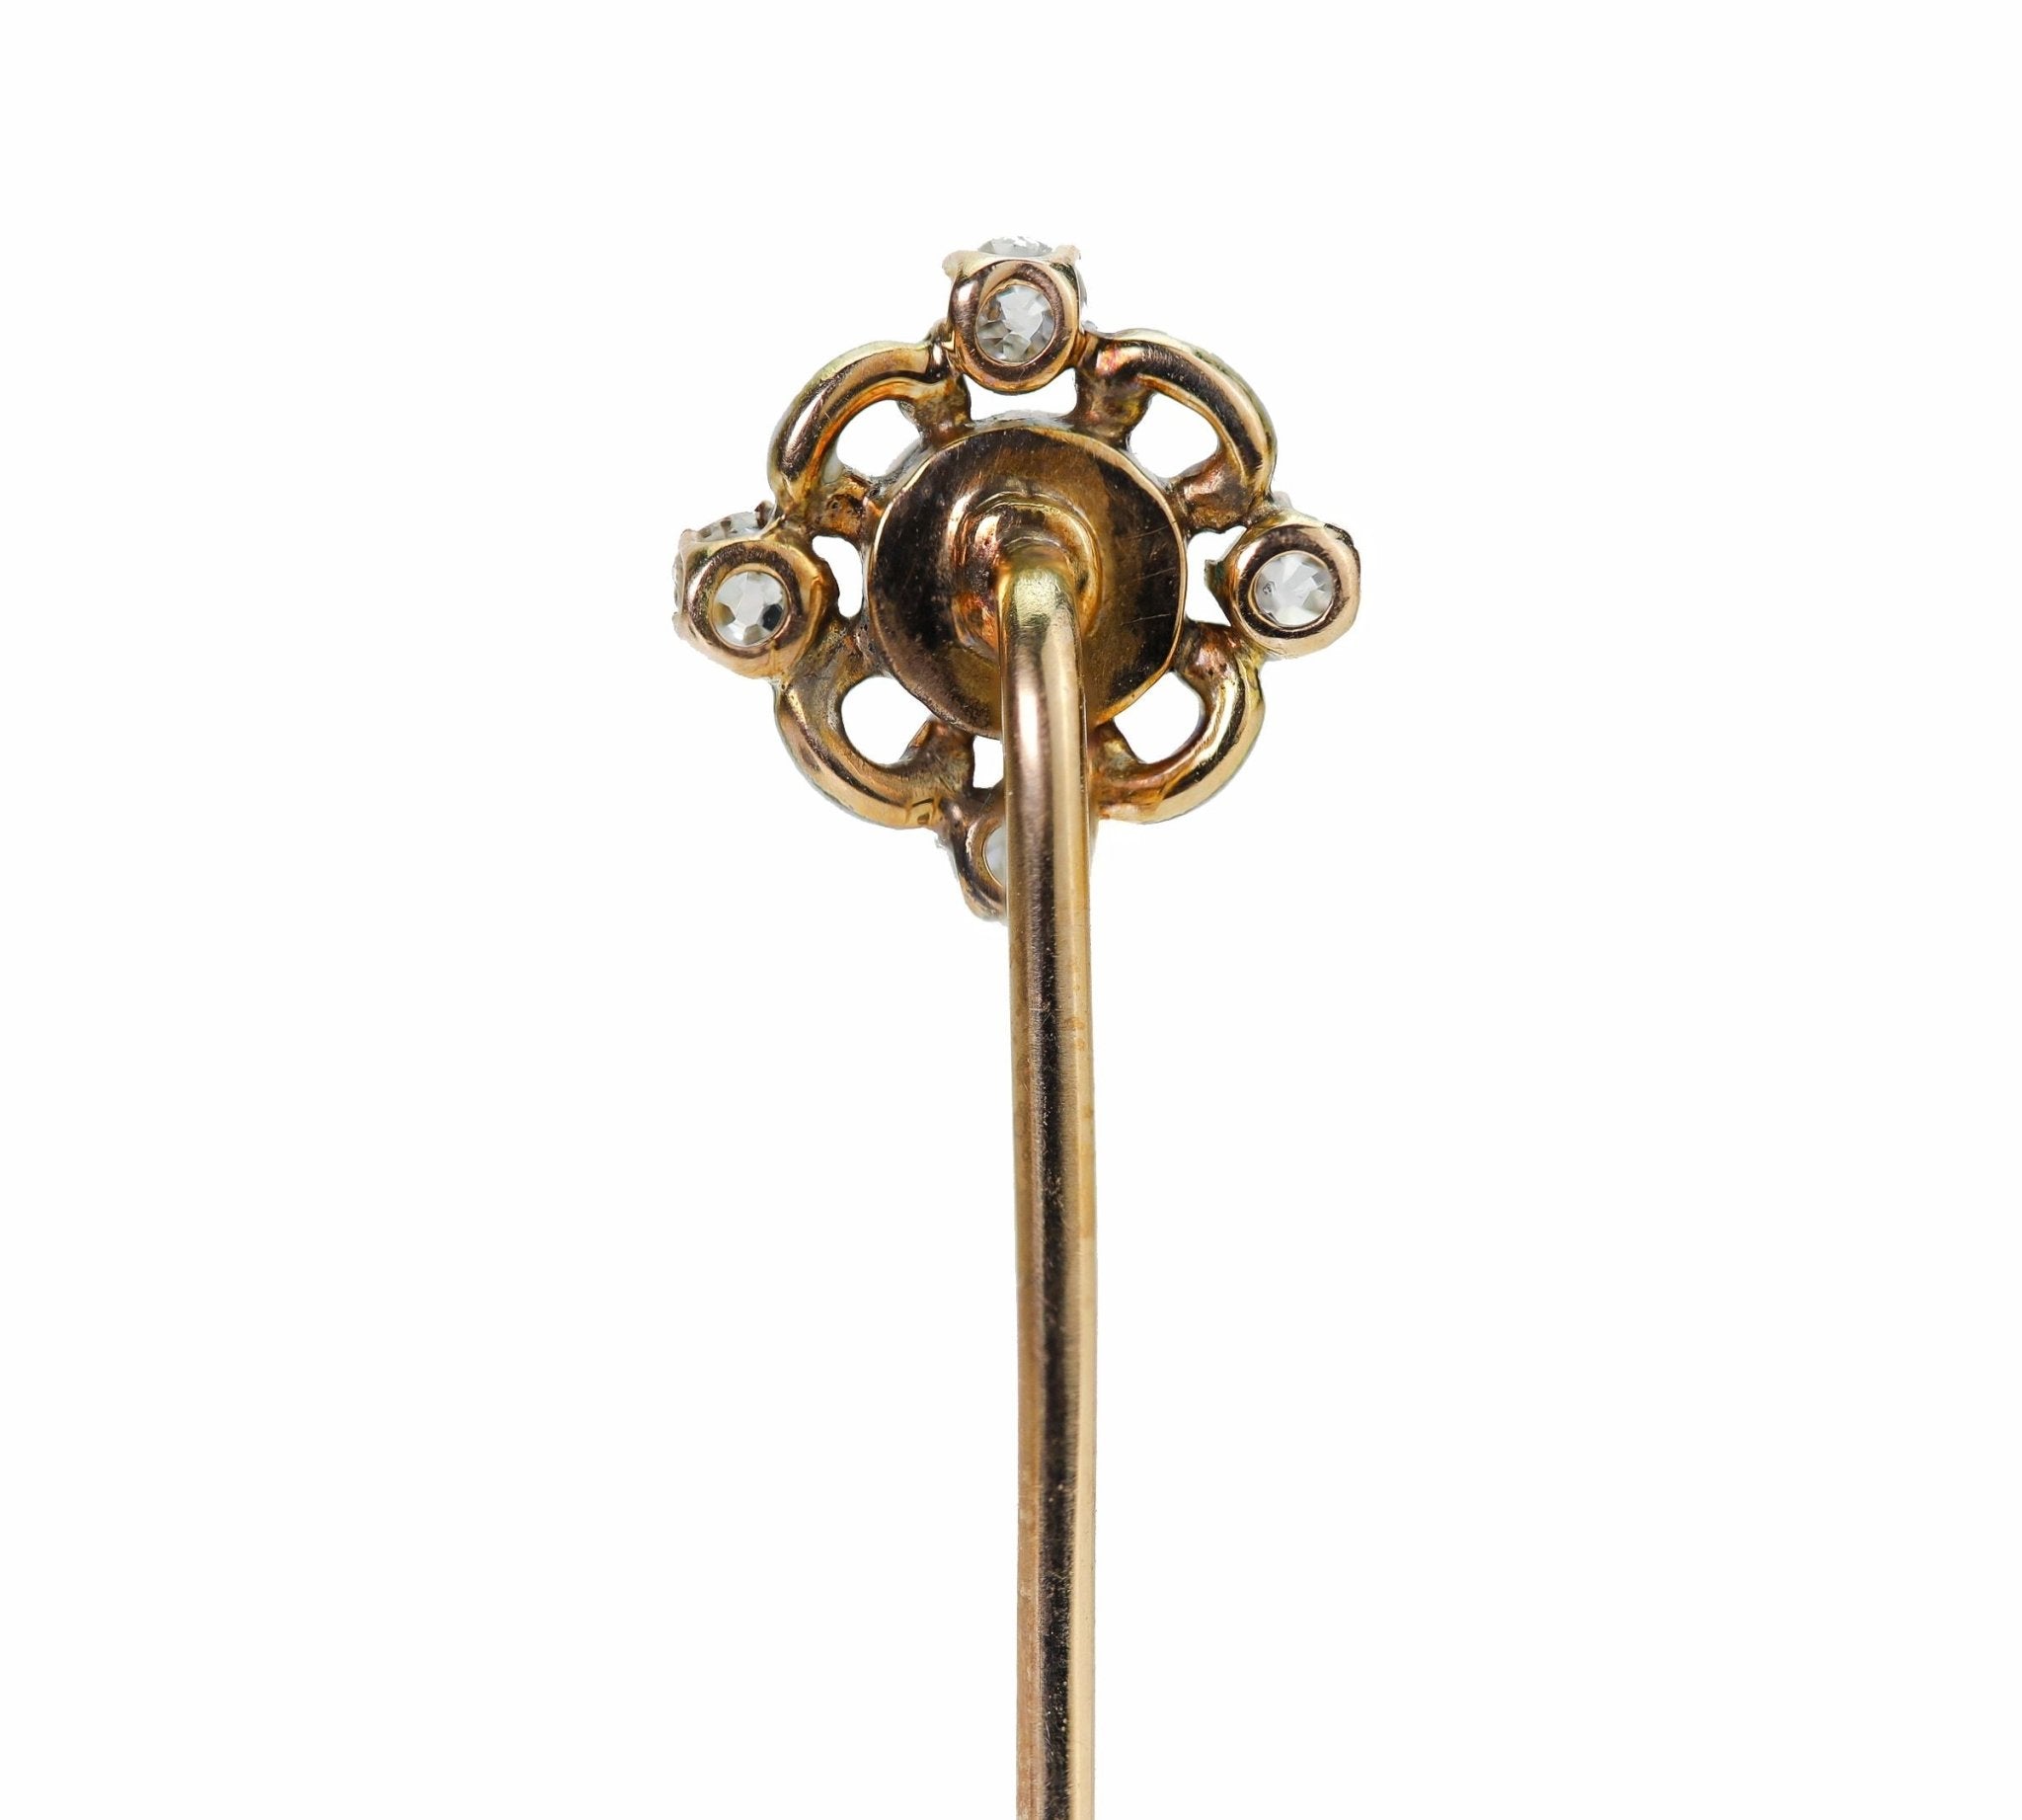 Antique Gold Diamond Turquoise Enamel Stick Pin - DSF Antique Jewelry